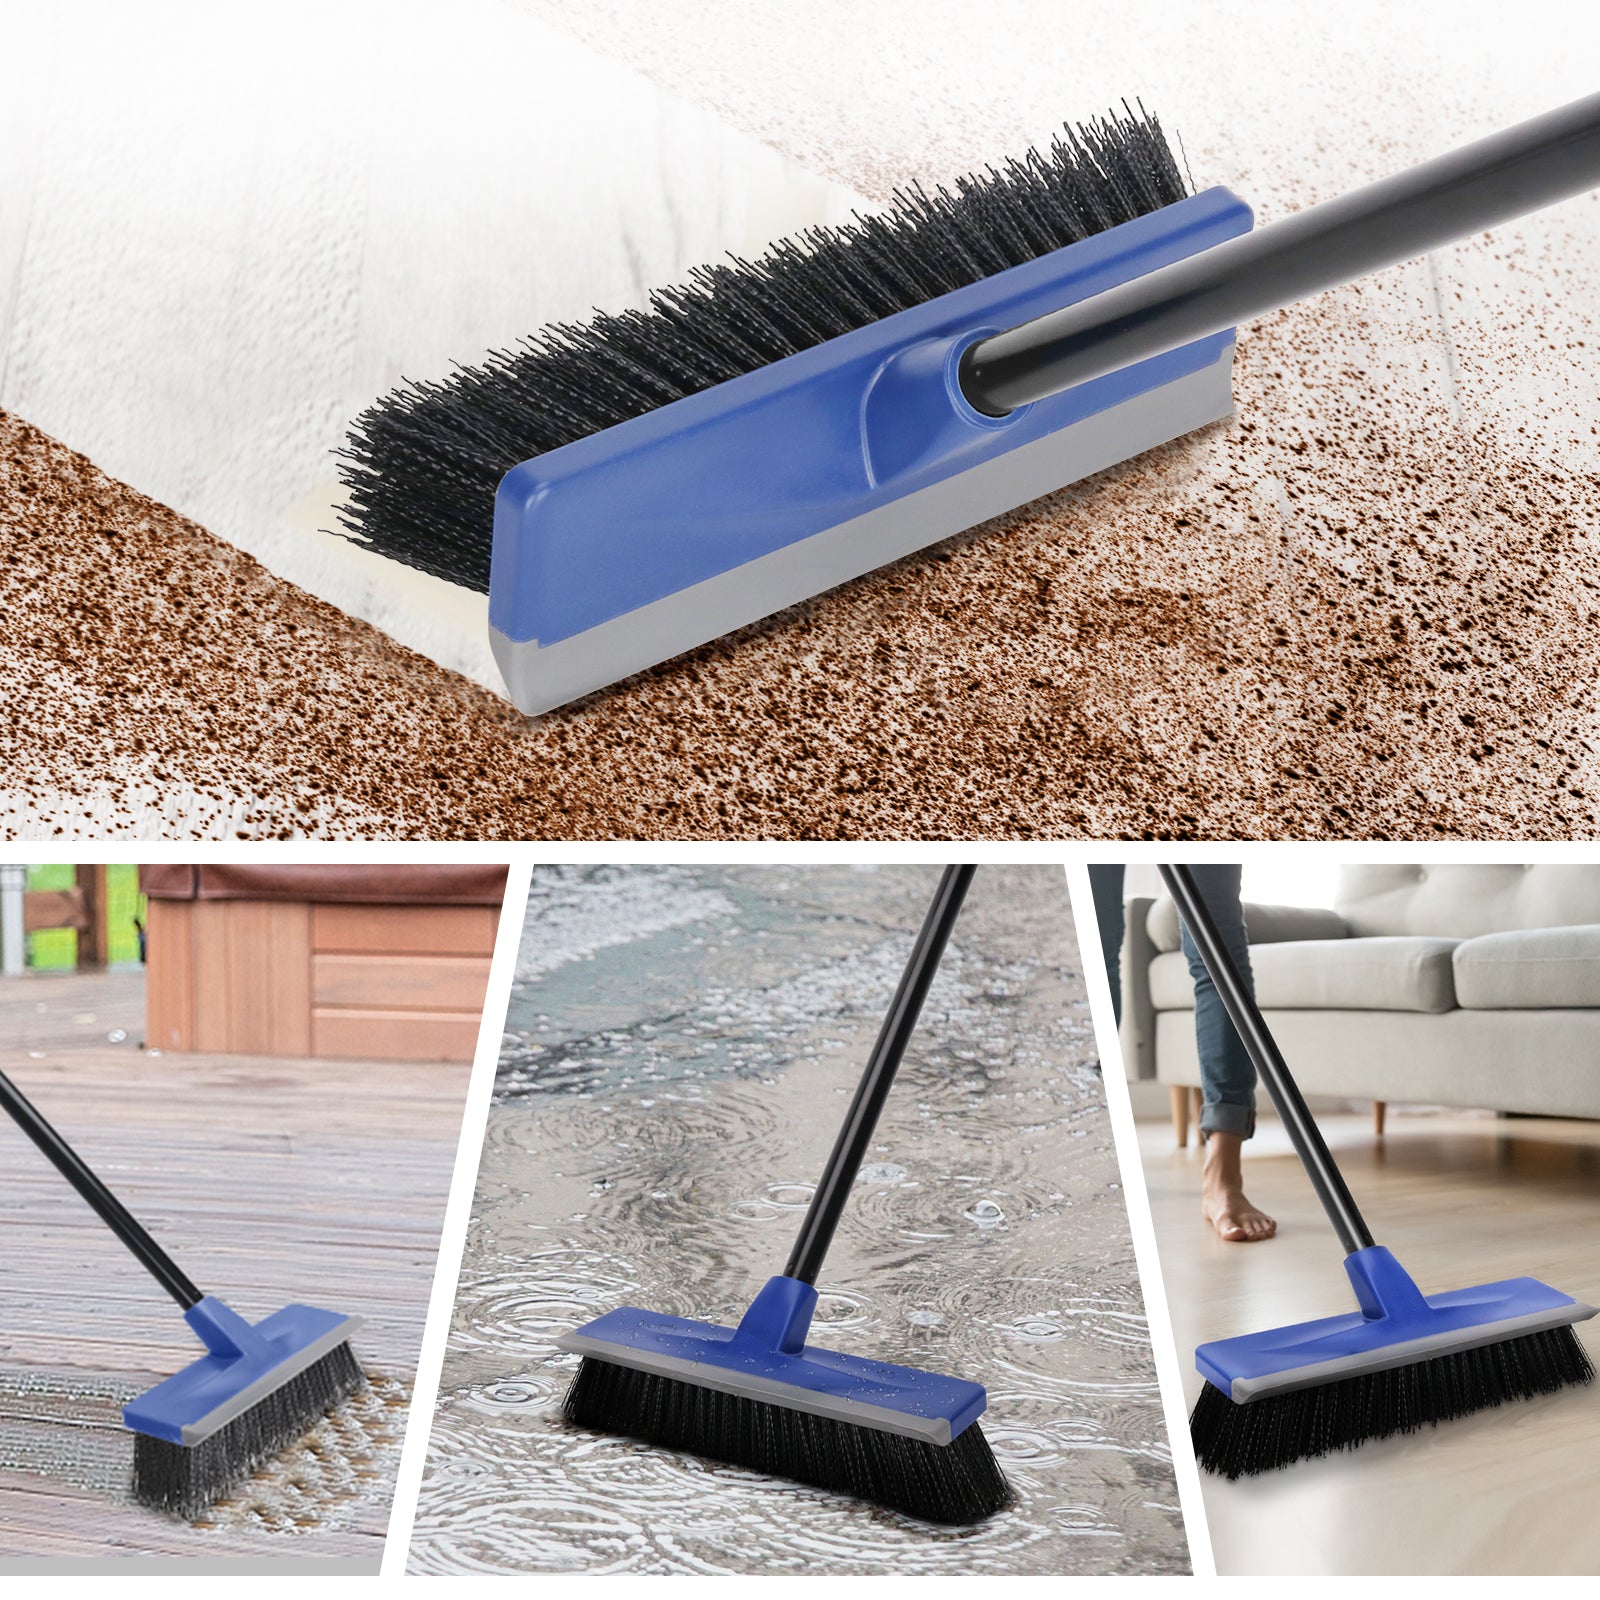 Floor Scrub Brush 2 in 1 Scrape and Brush Long Handle Wiper Stiff Bristle  Magic Broom Brush Squeegee Tile Kitchen Cleaning Tools - AliExpress